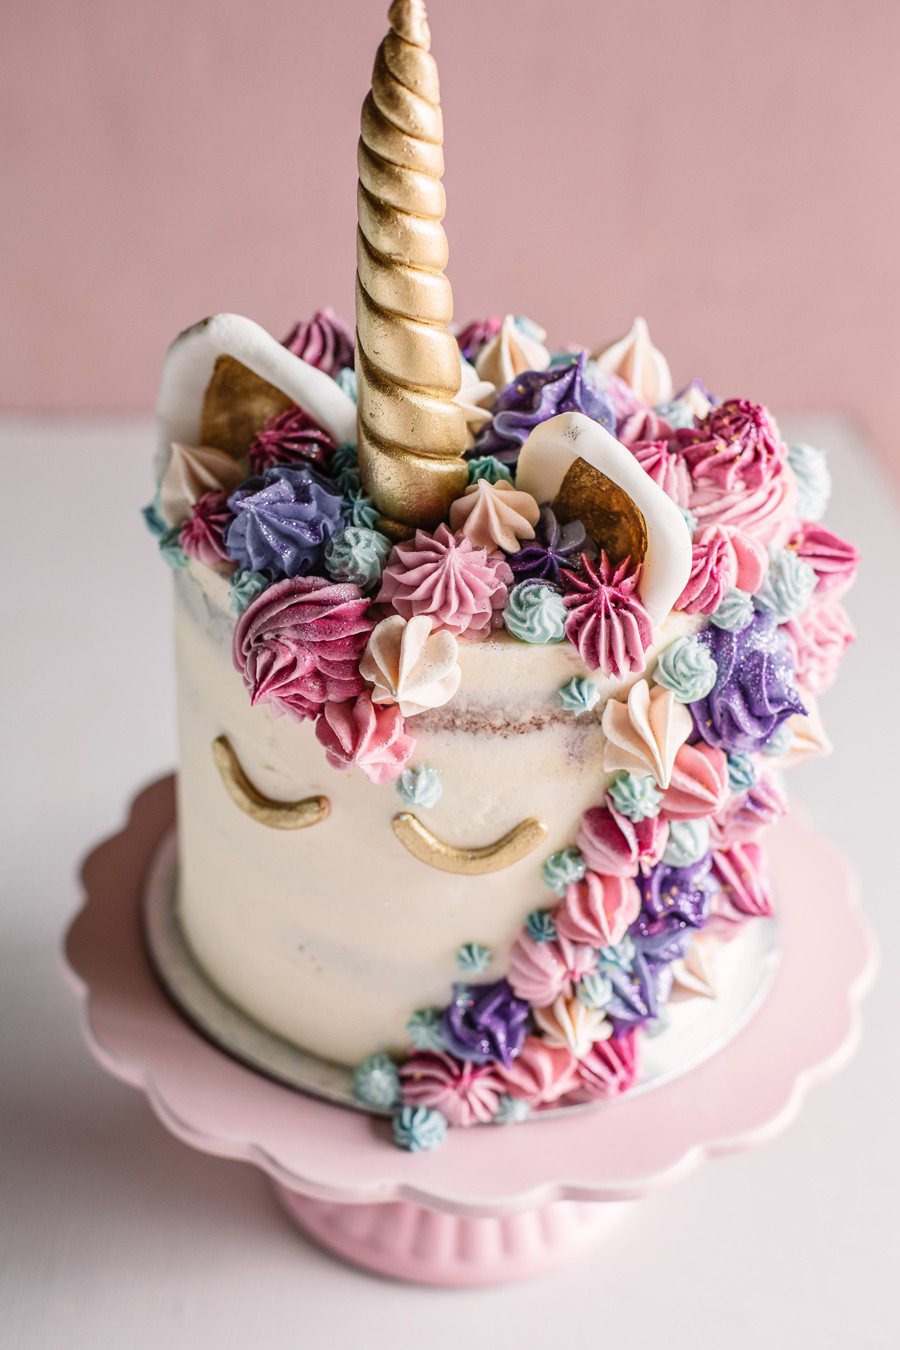 Unicorn Cake Recipe Inspirational How to Make A Unicorn Cake Vanilla Sponge with buttercream